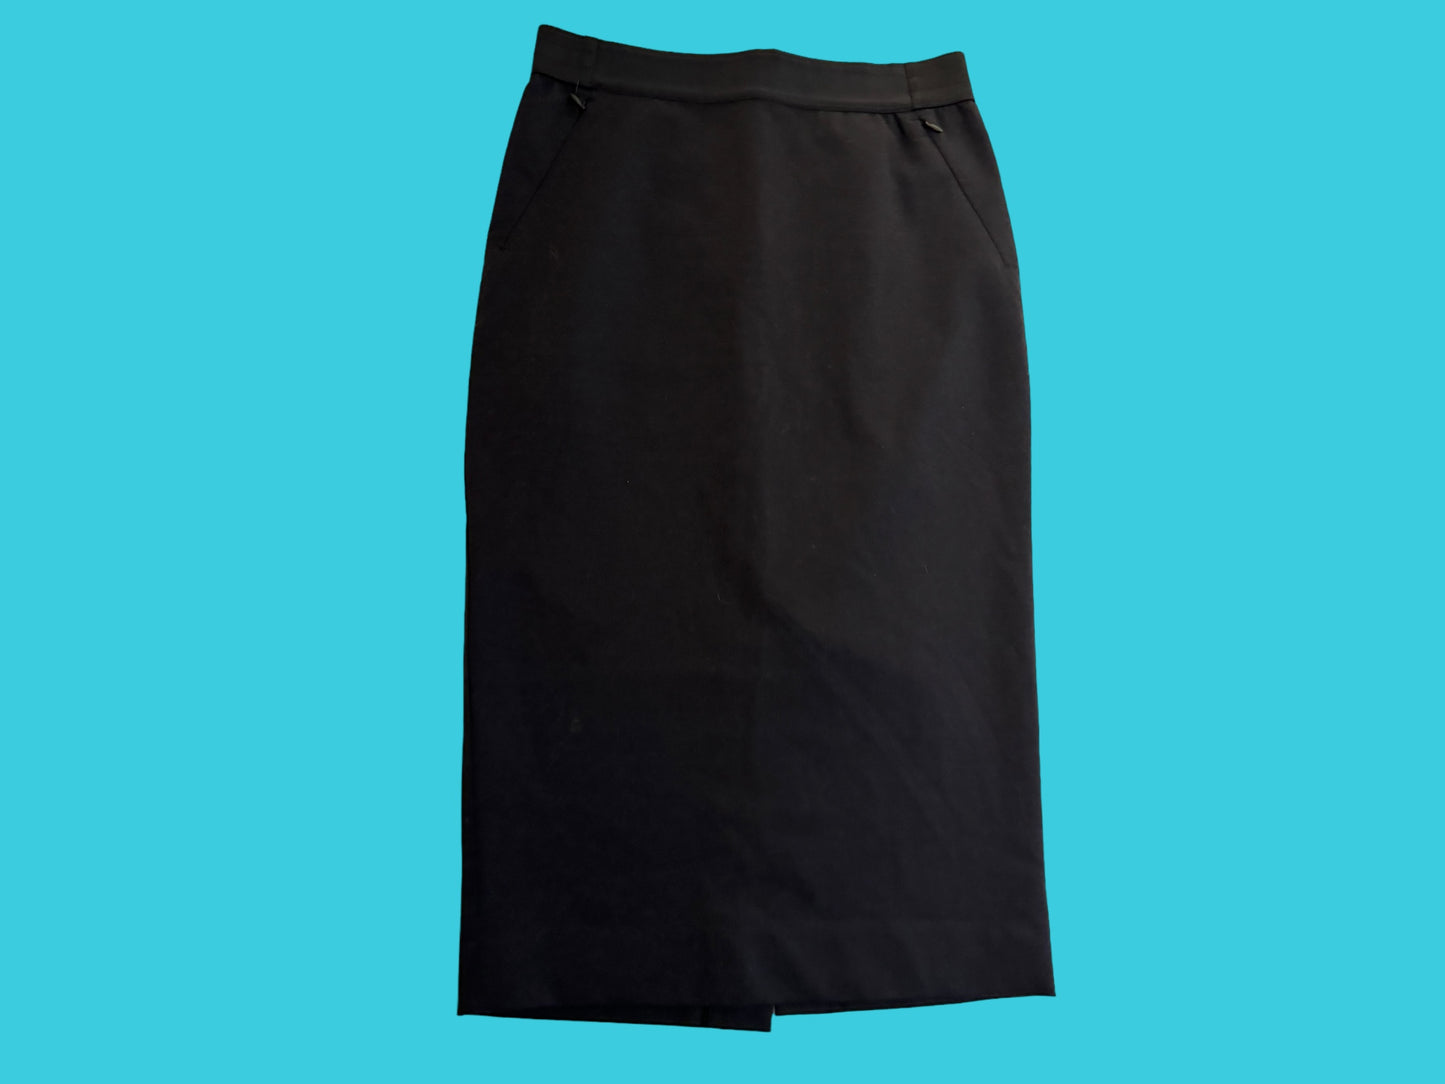 KIT & ACE black skirt ‘nwt’ size medium